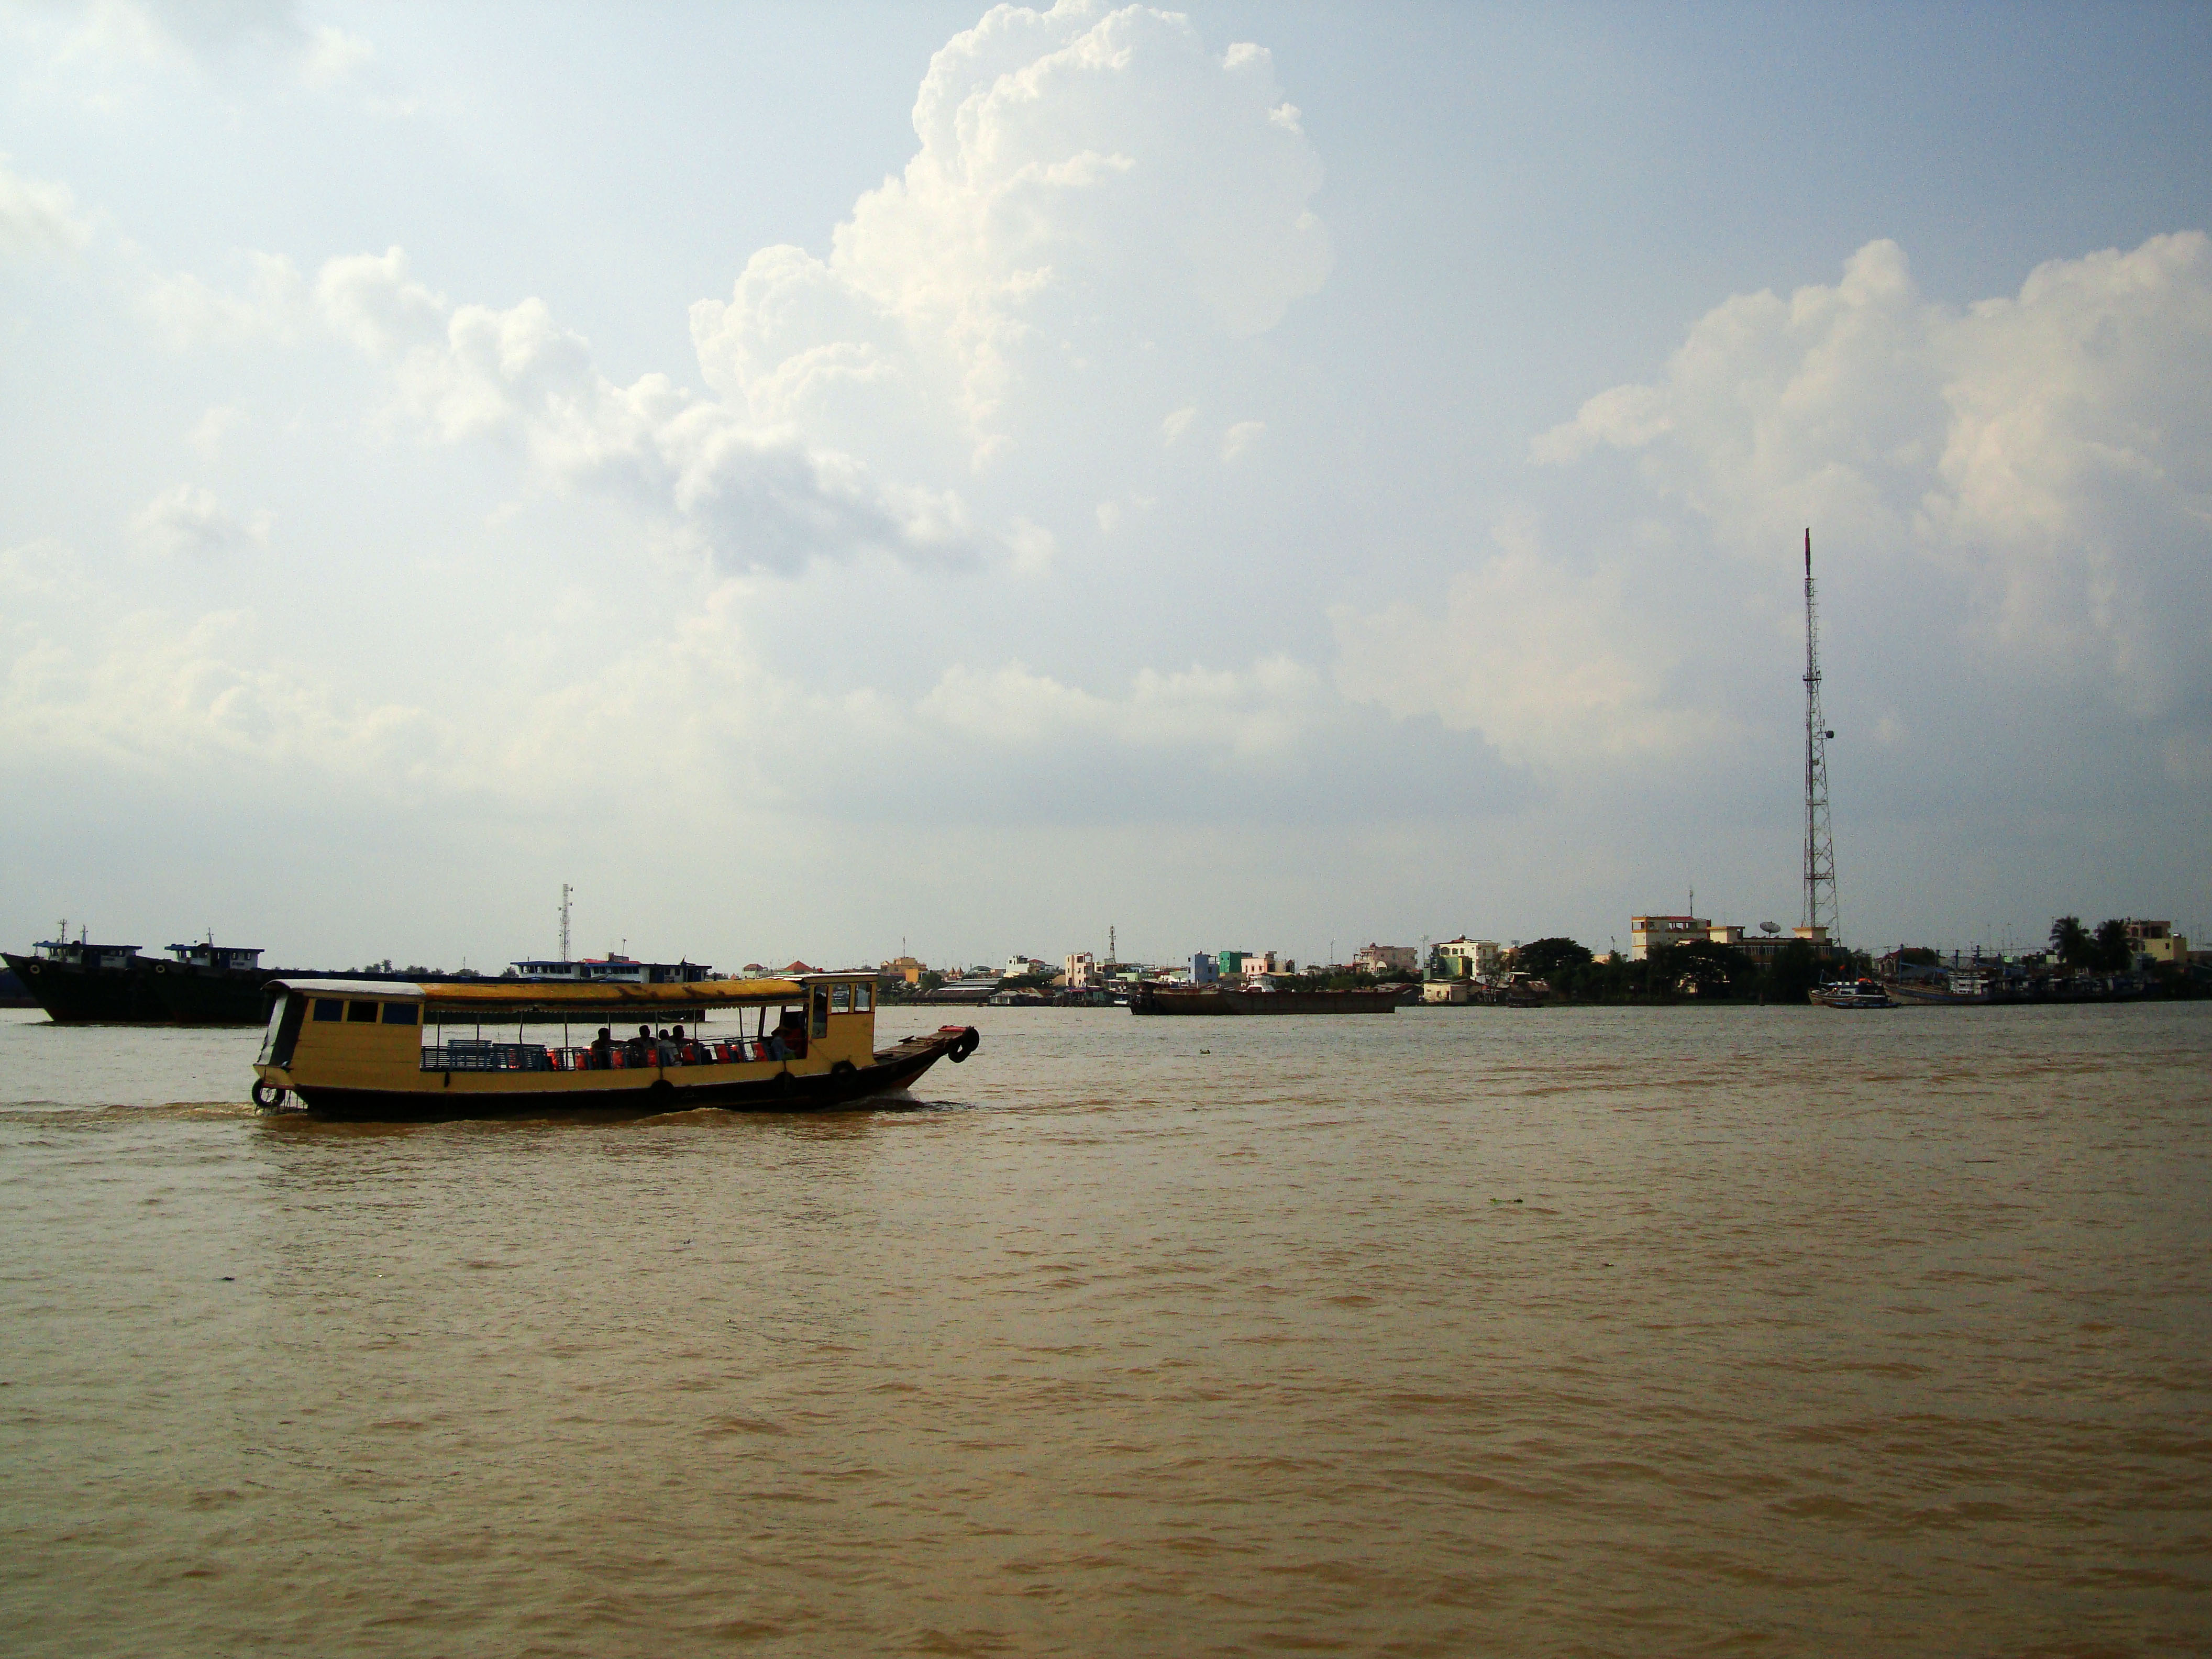 Mekong Delta Saigon River cruise 5th stage Nov 2009 15